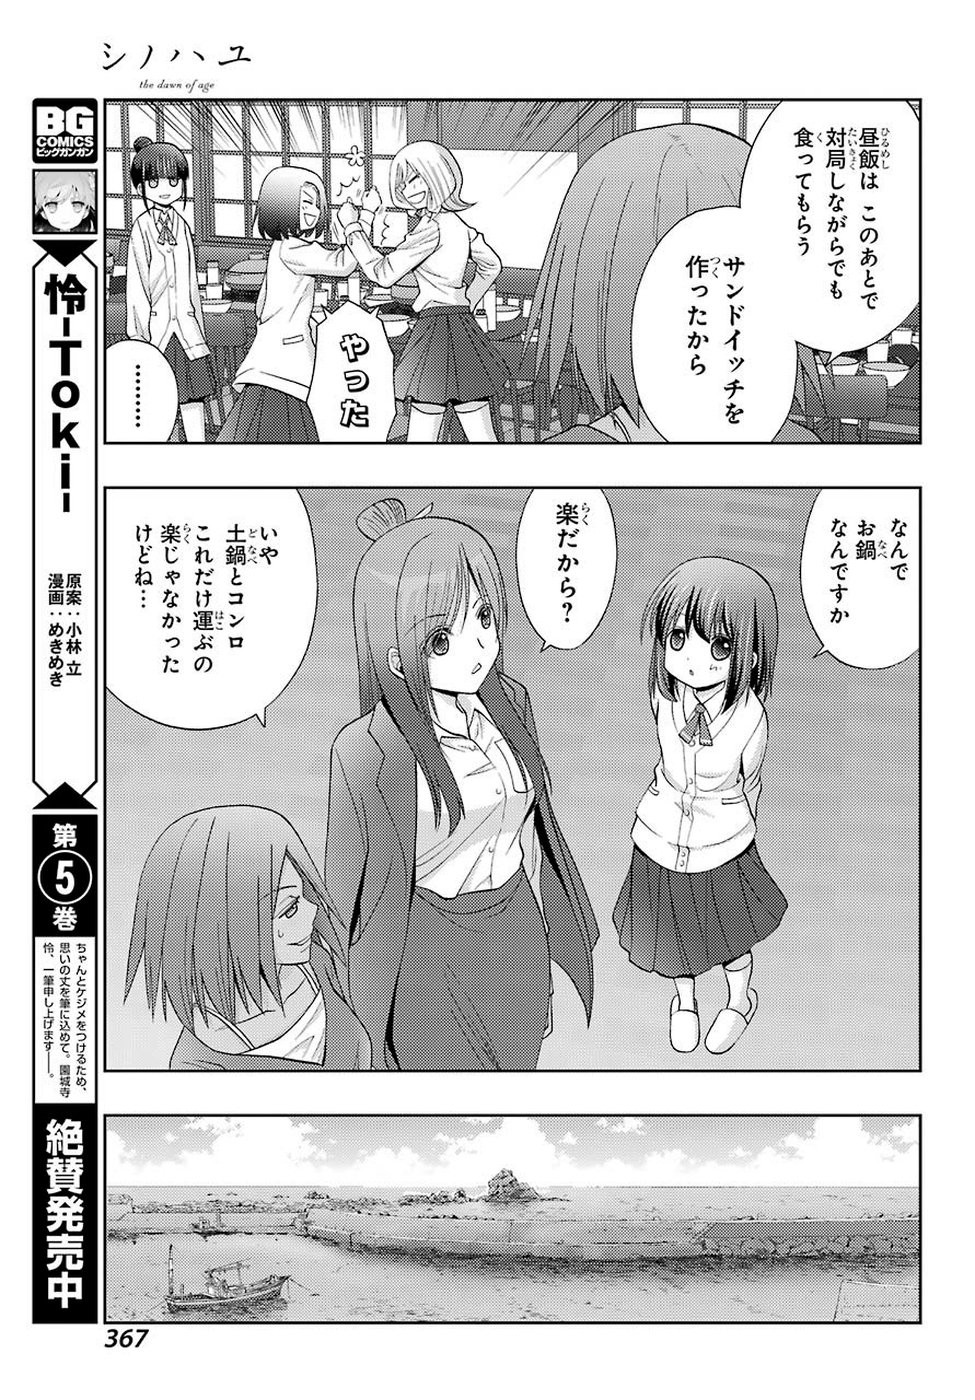 Shinohayu - The Dawn of Age Manga - Chapter 074 - Page 5